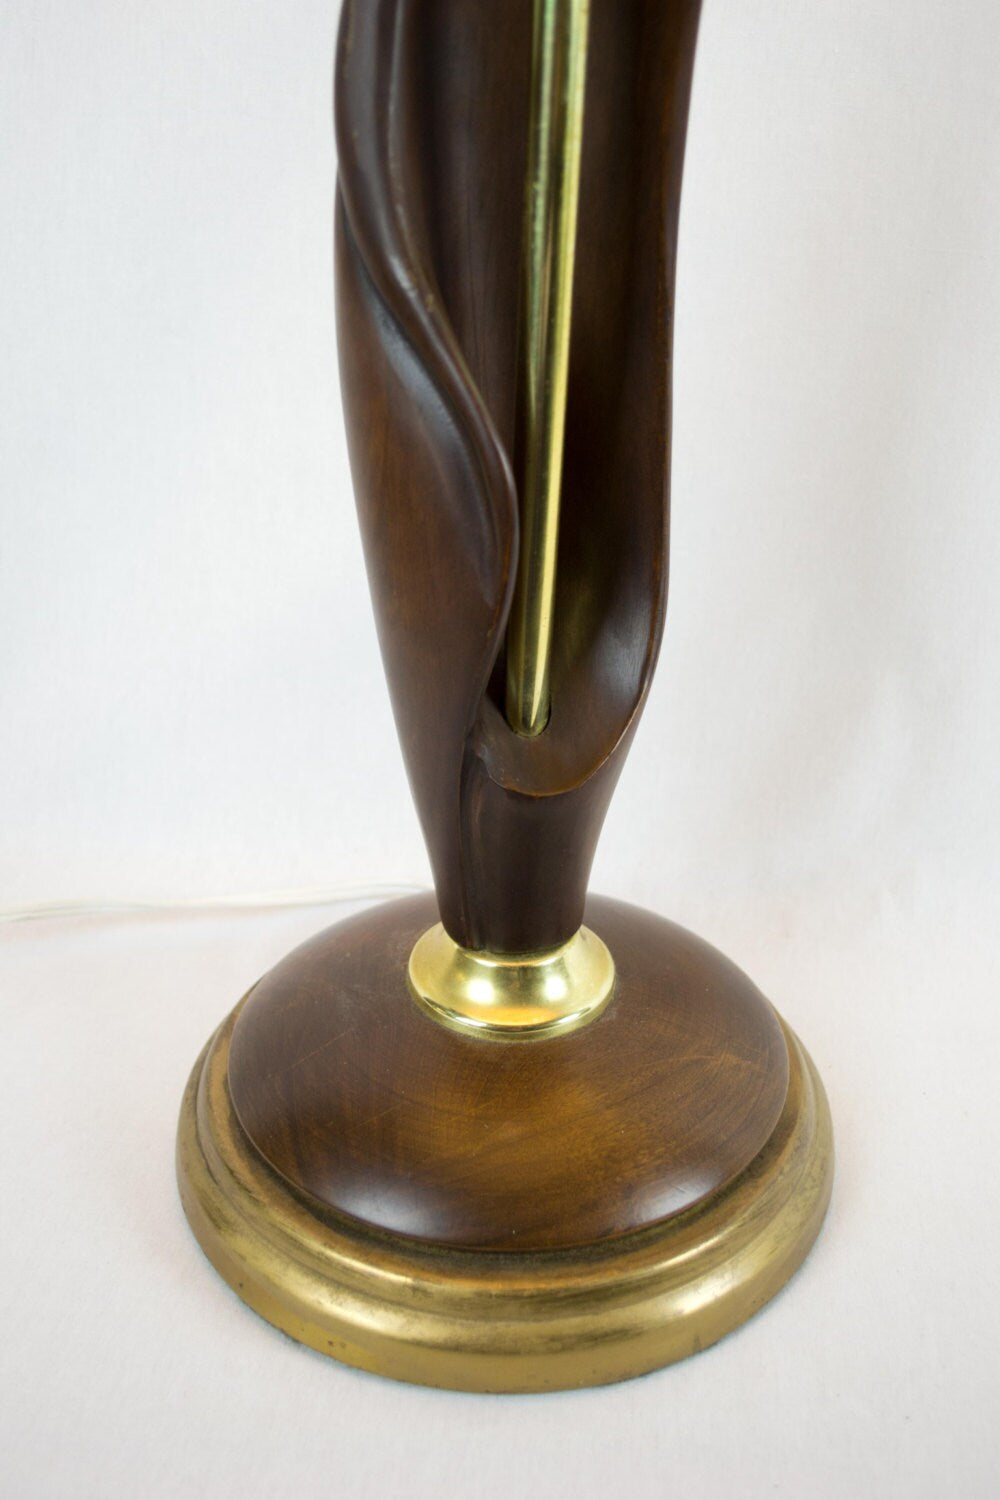 Mid Century Modern Sculptural Wood Table Lamp